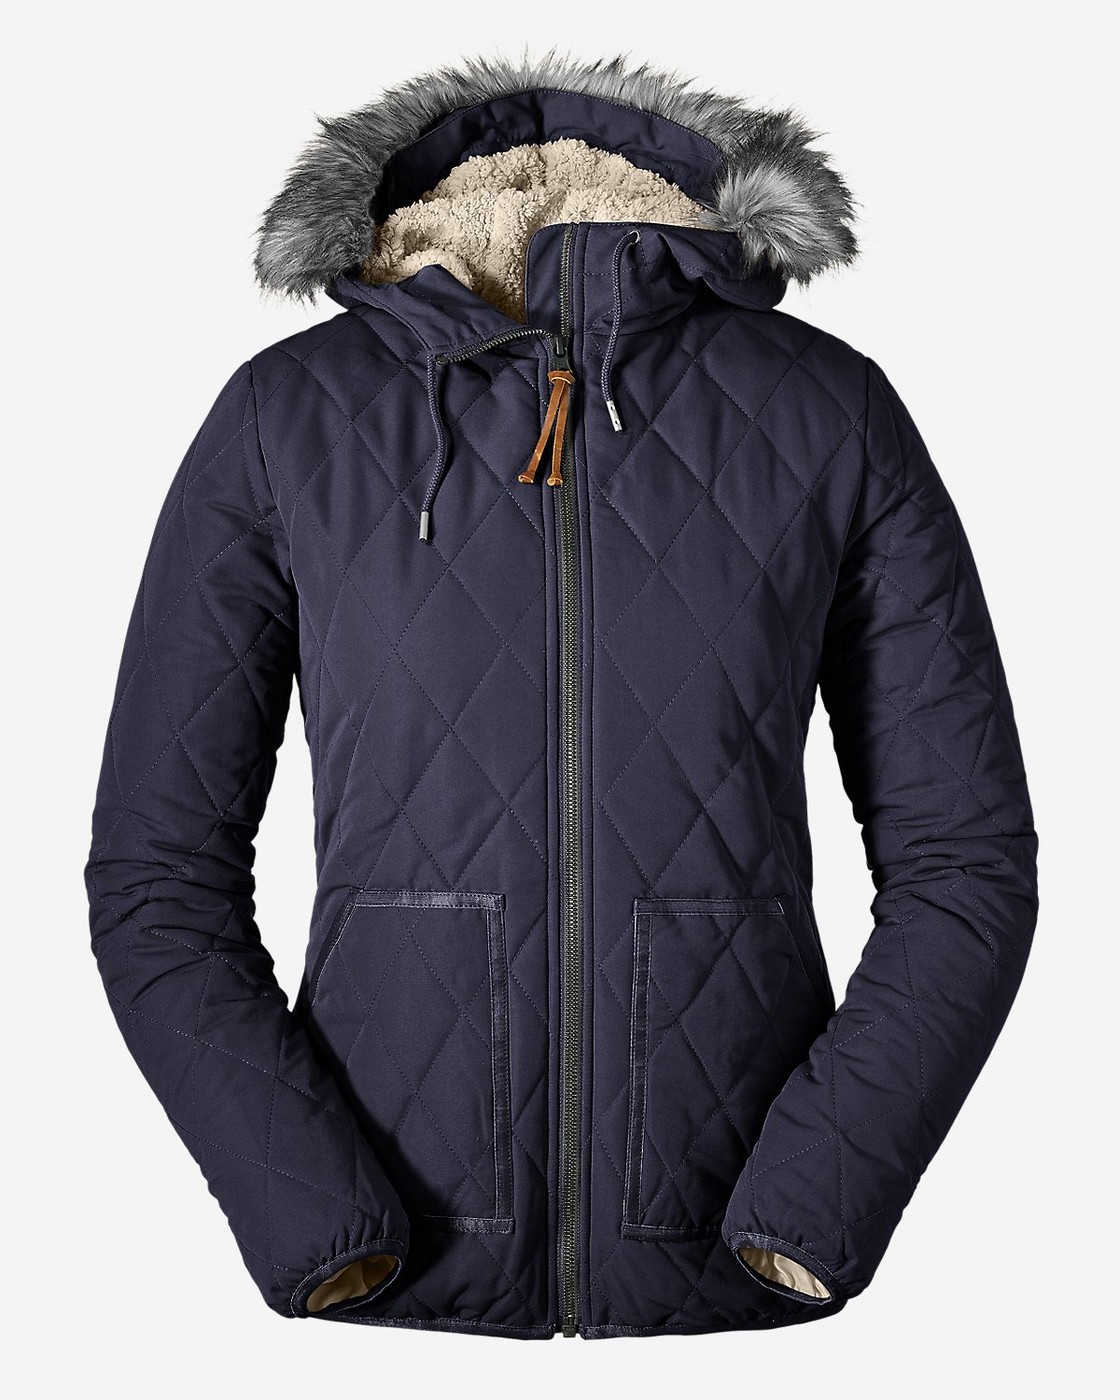 Женская зимняя куртка EddieBauer, S, S